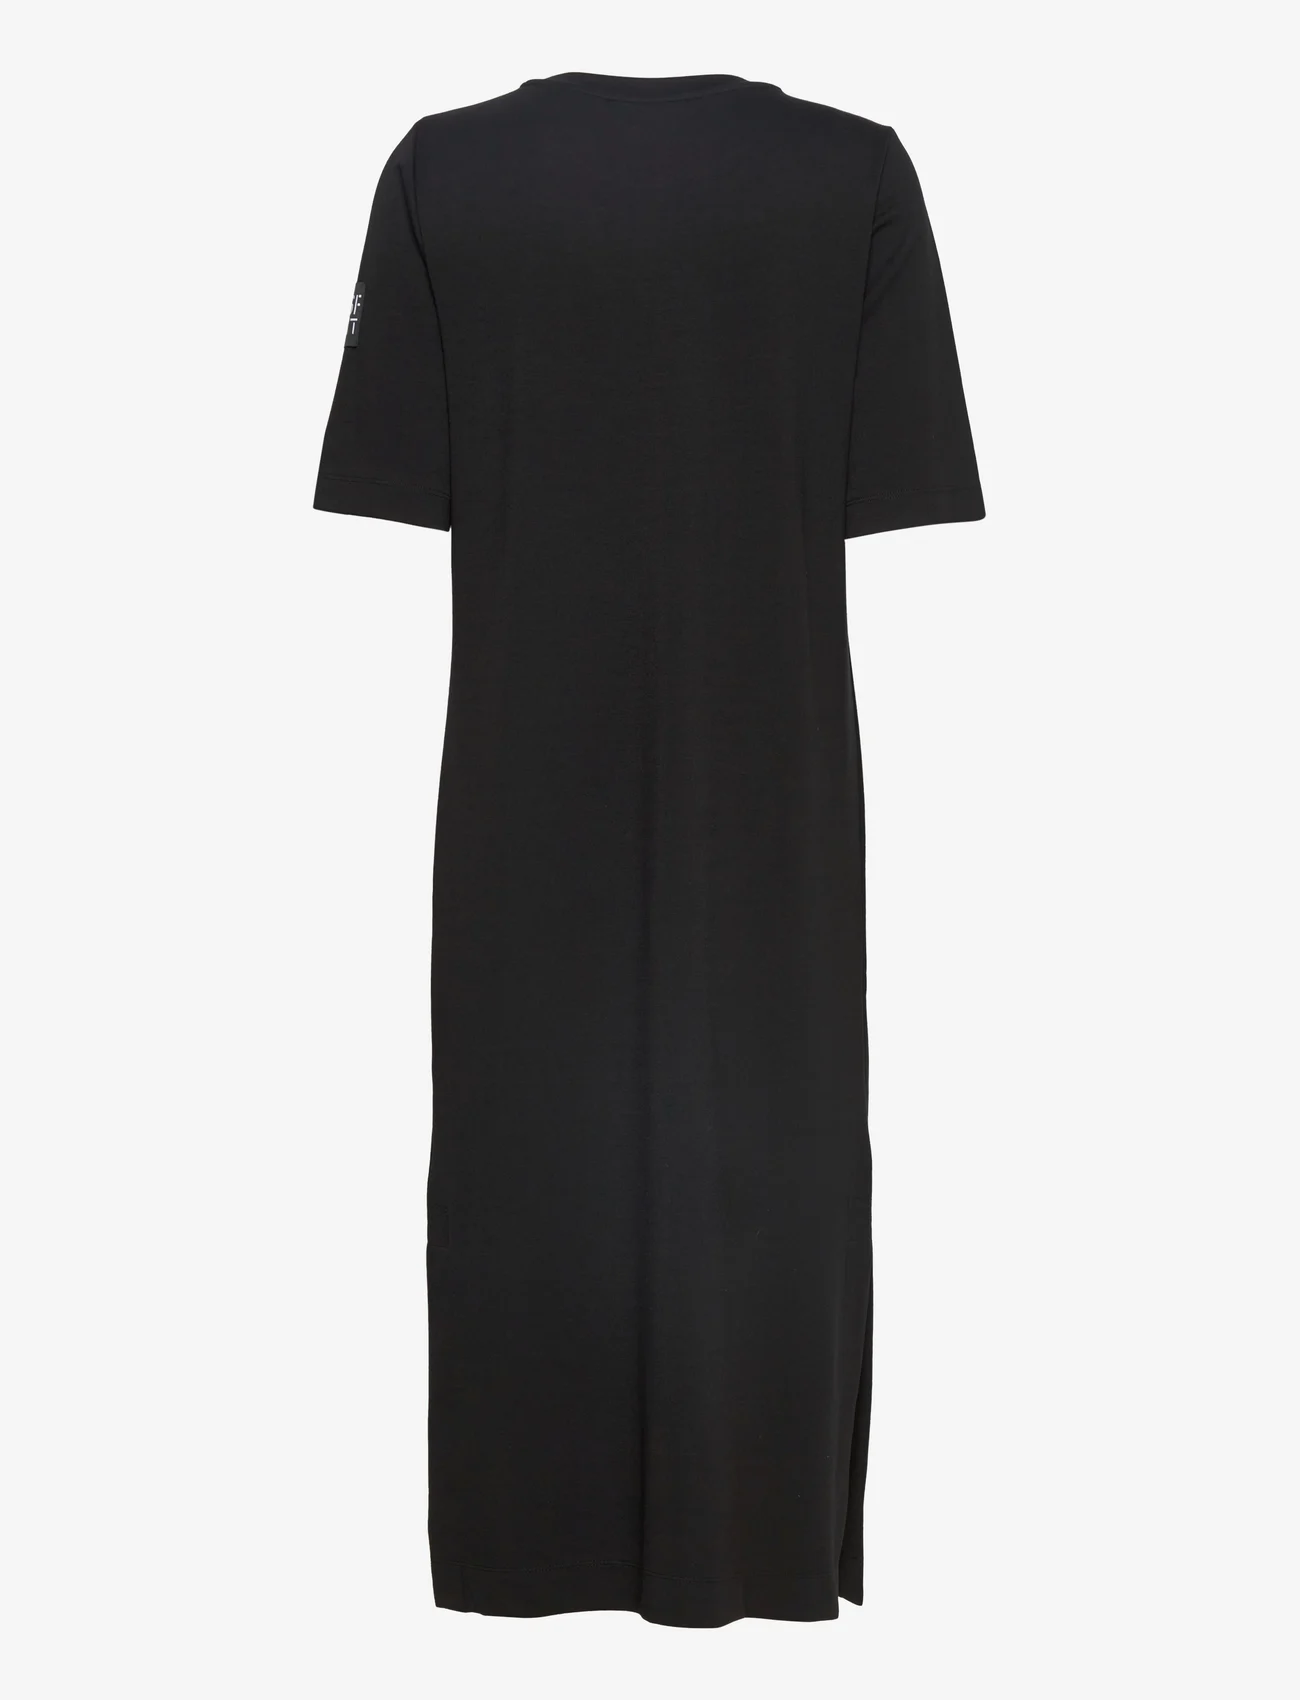 Esprit Collection - Midi-length T-shirt dress - t-kreklu kleitas - black - 1